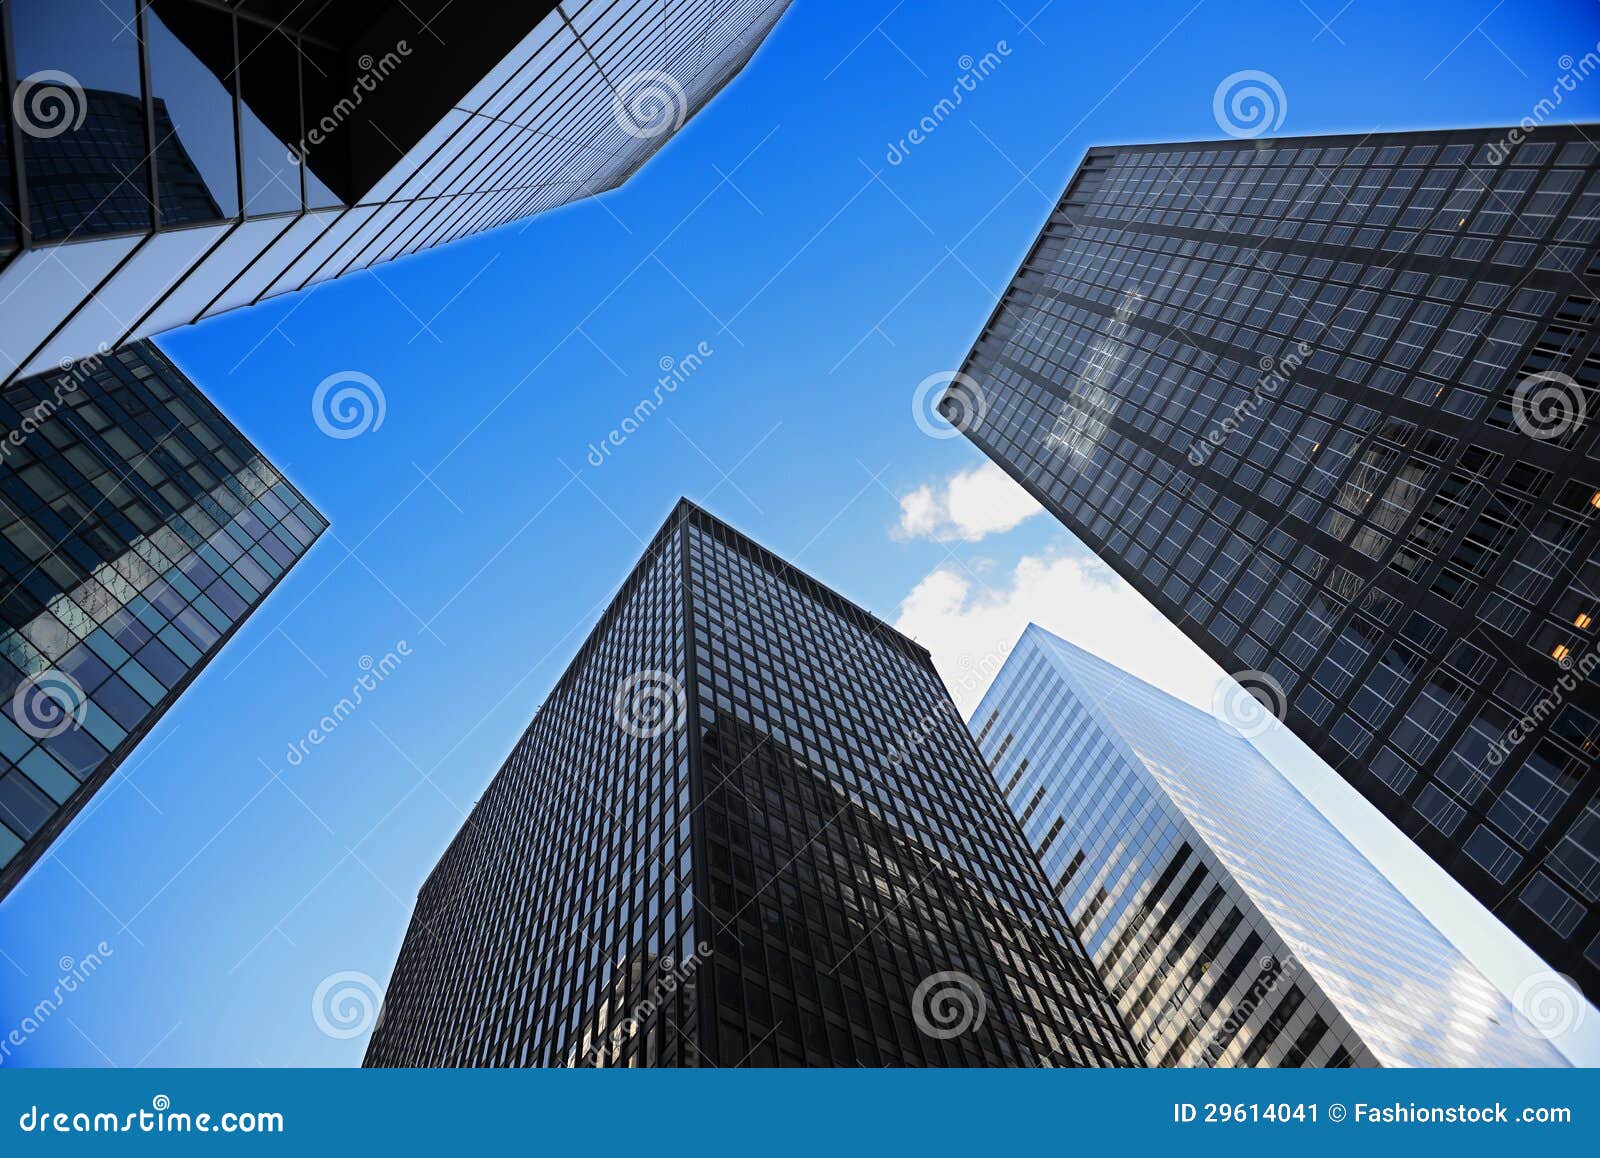 looking up a skyscraper office block